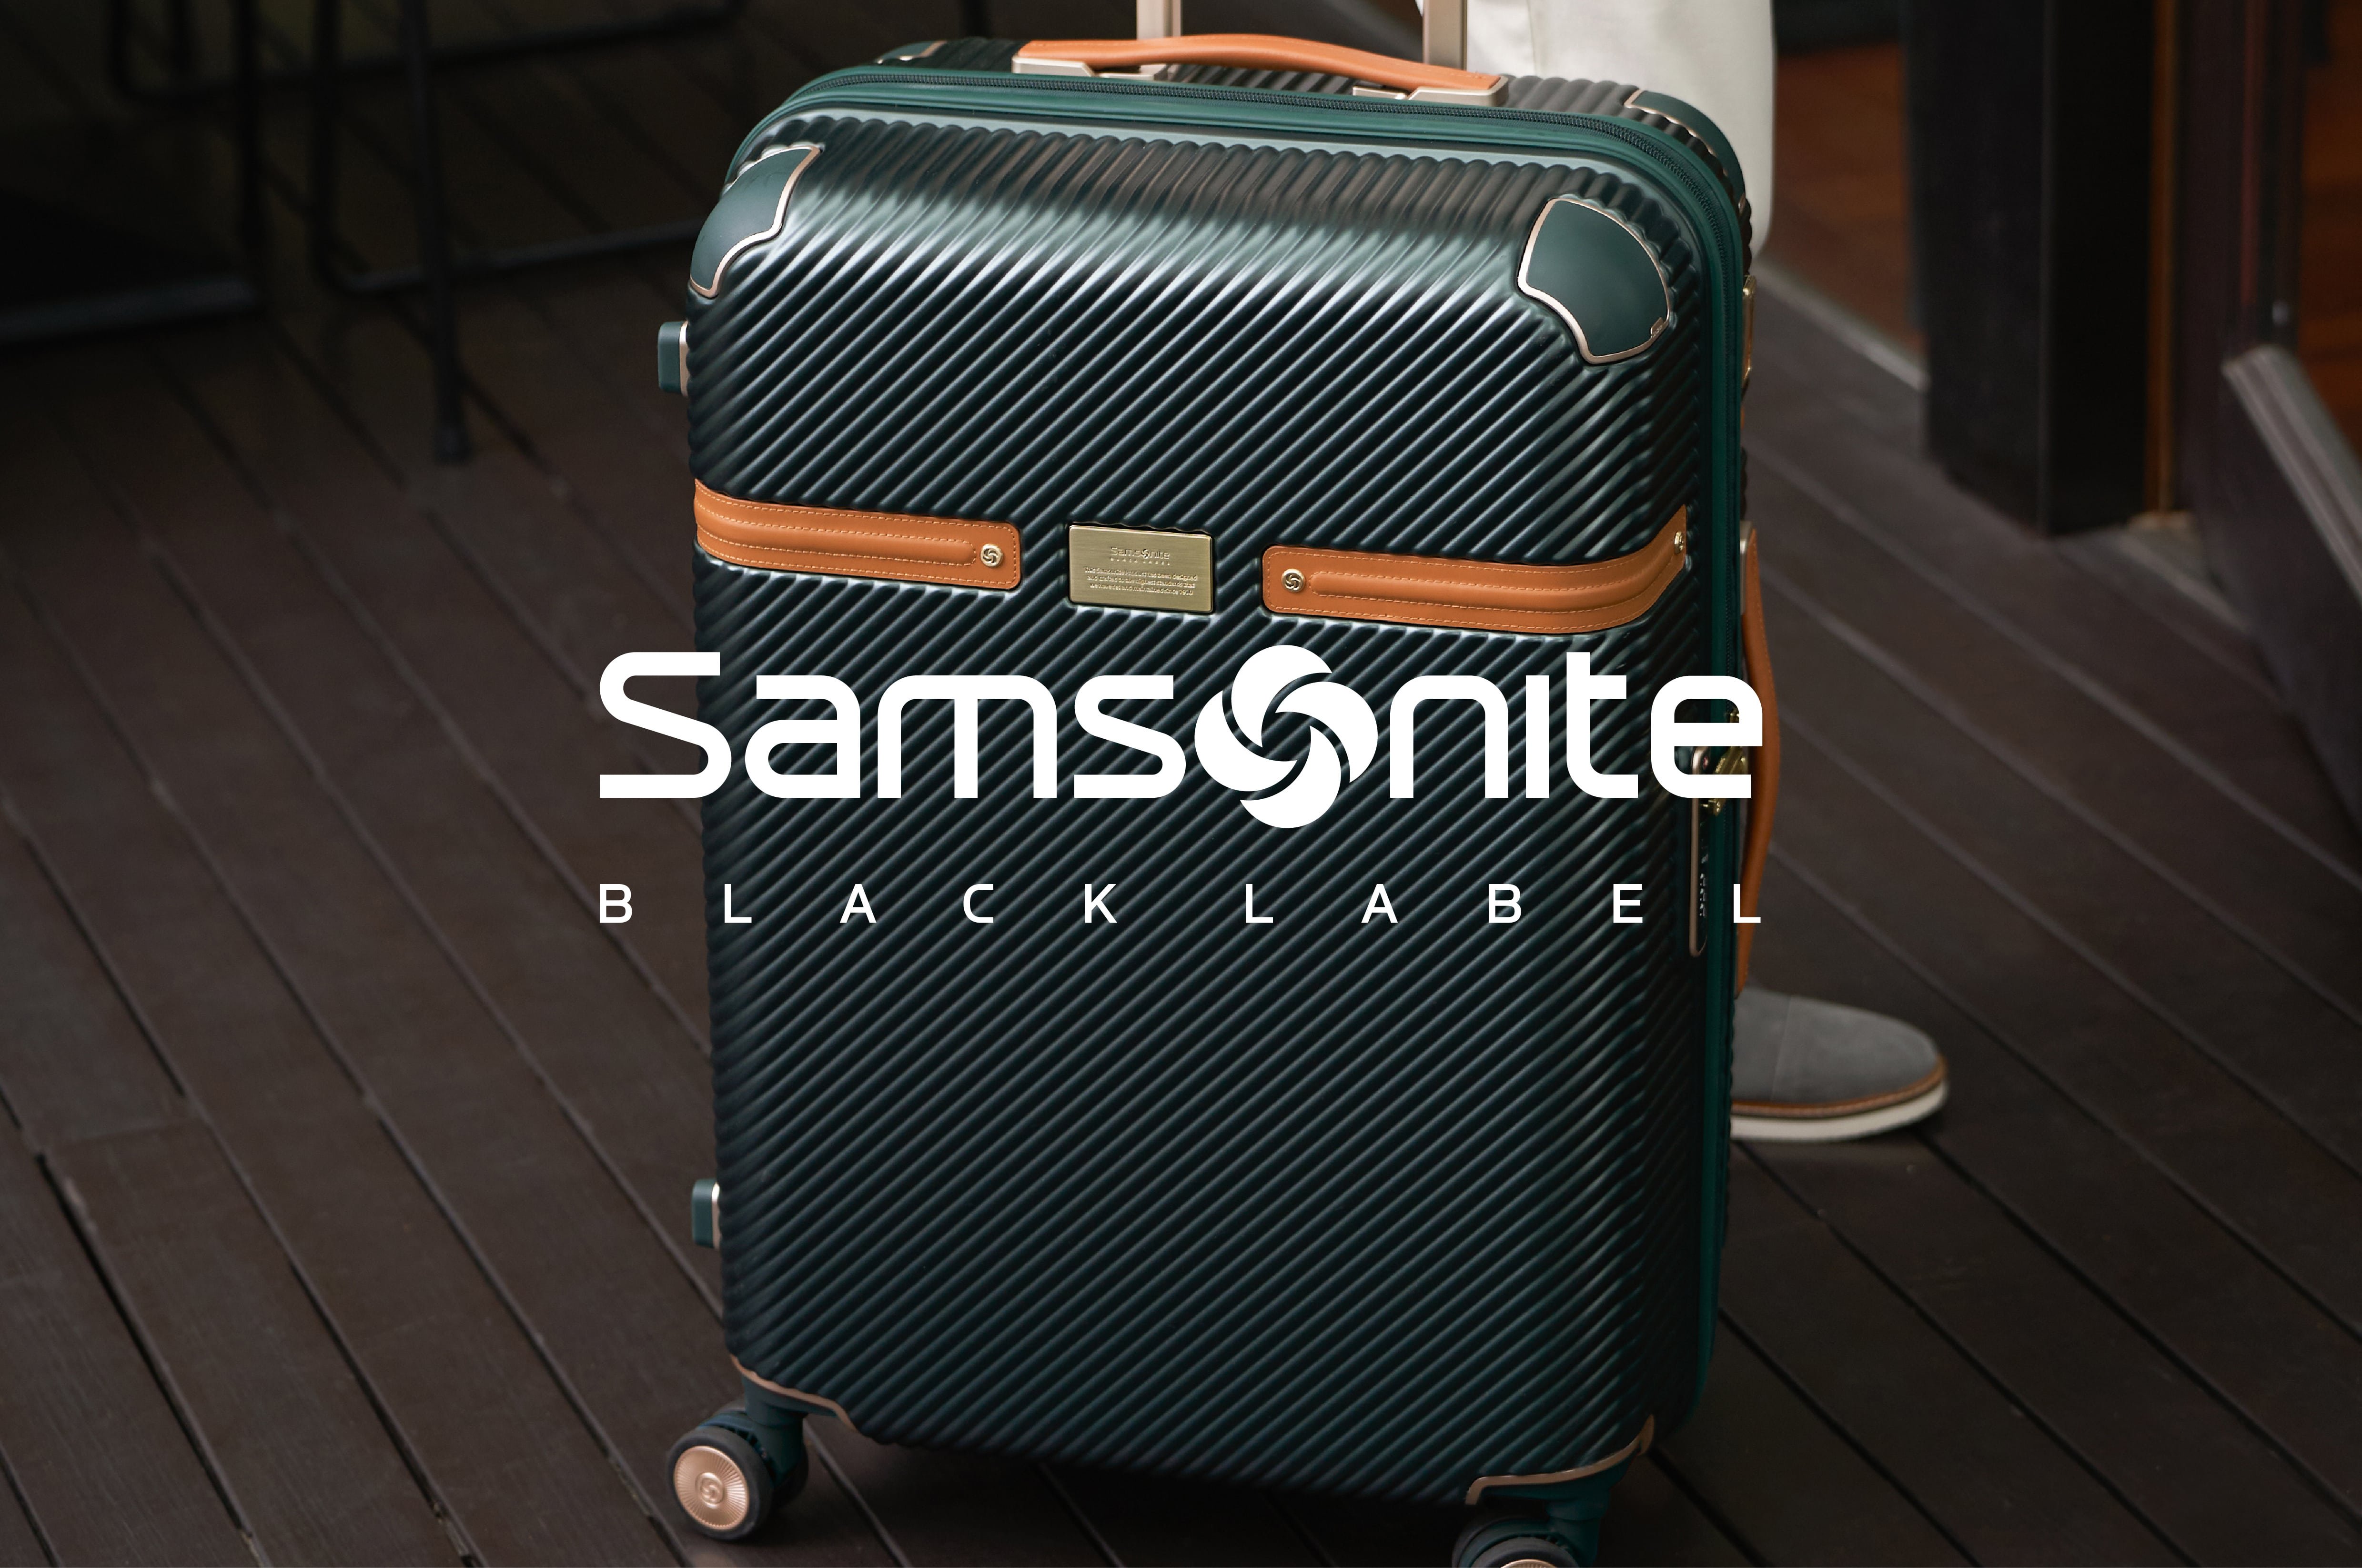 Samsonite - Black Label